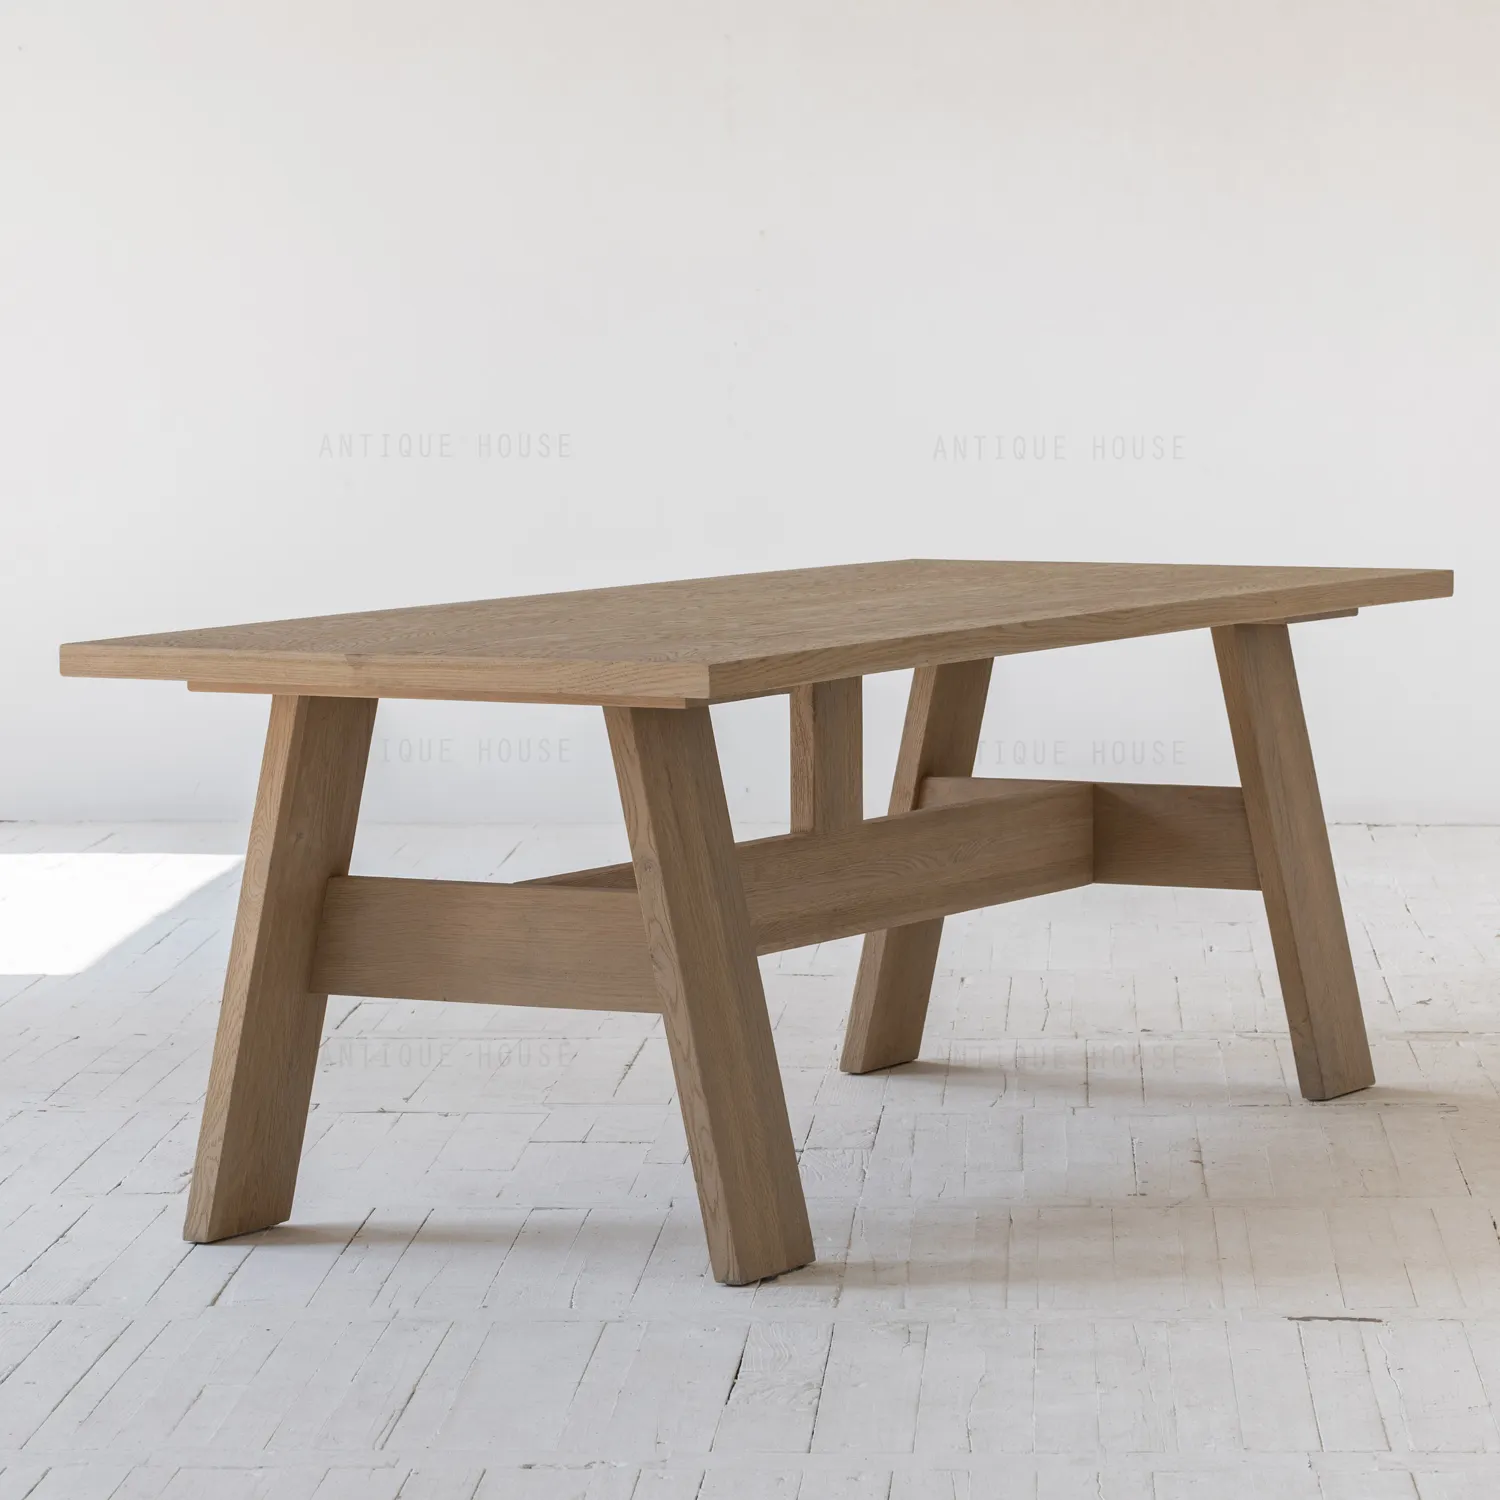 Casa de campo retro francesa minimalista rústica natural clásica gran madera de roble mesa de comedor de madera de 10 plazas